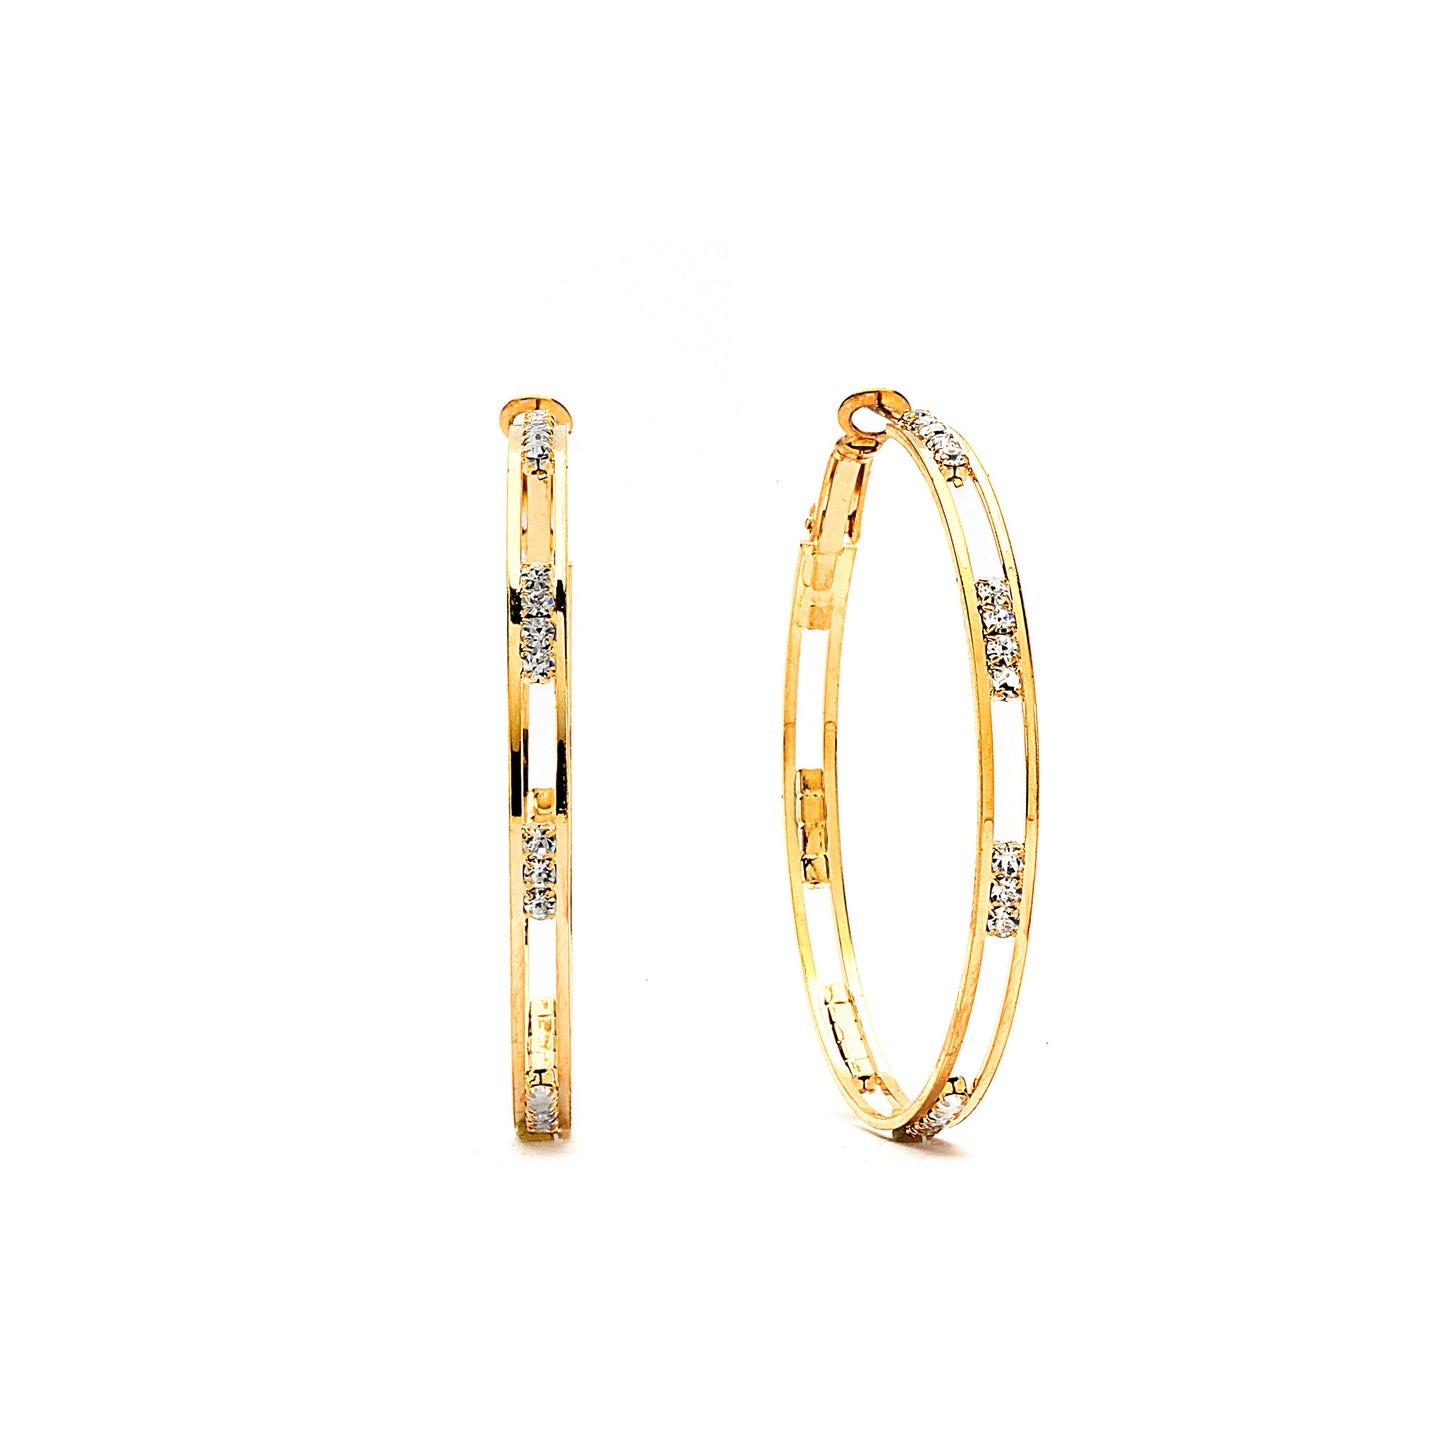 Premium Cubic Zirconia Interval Hoop Earrings - 14K Gold Filled